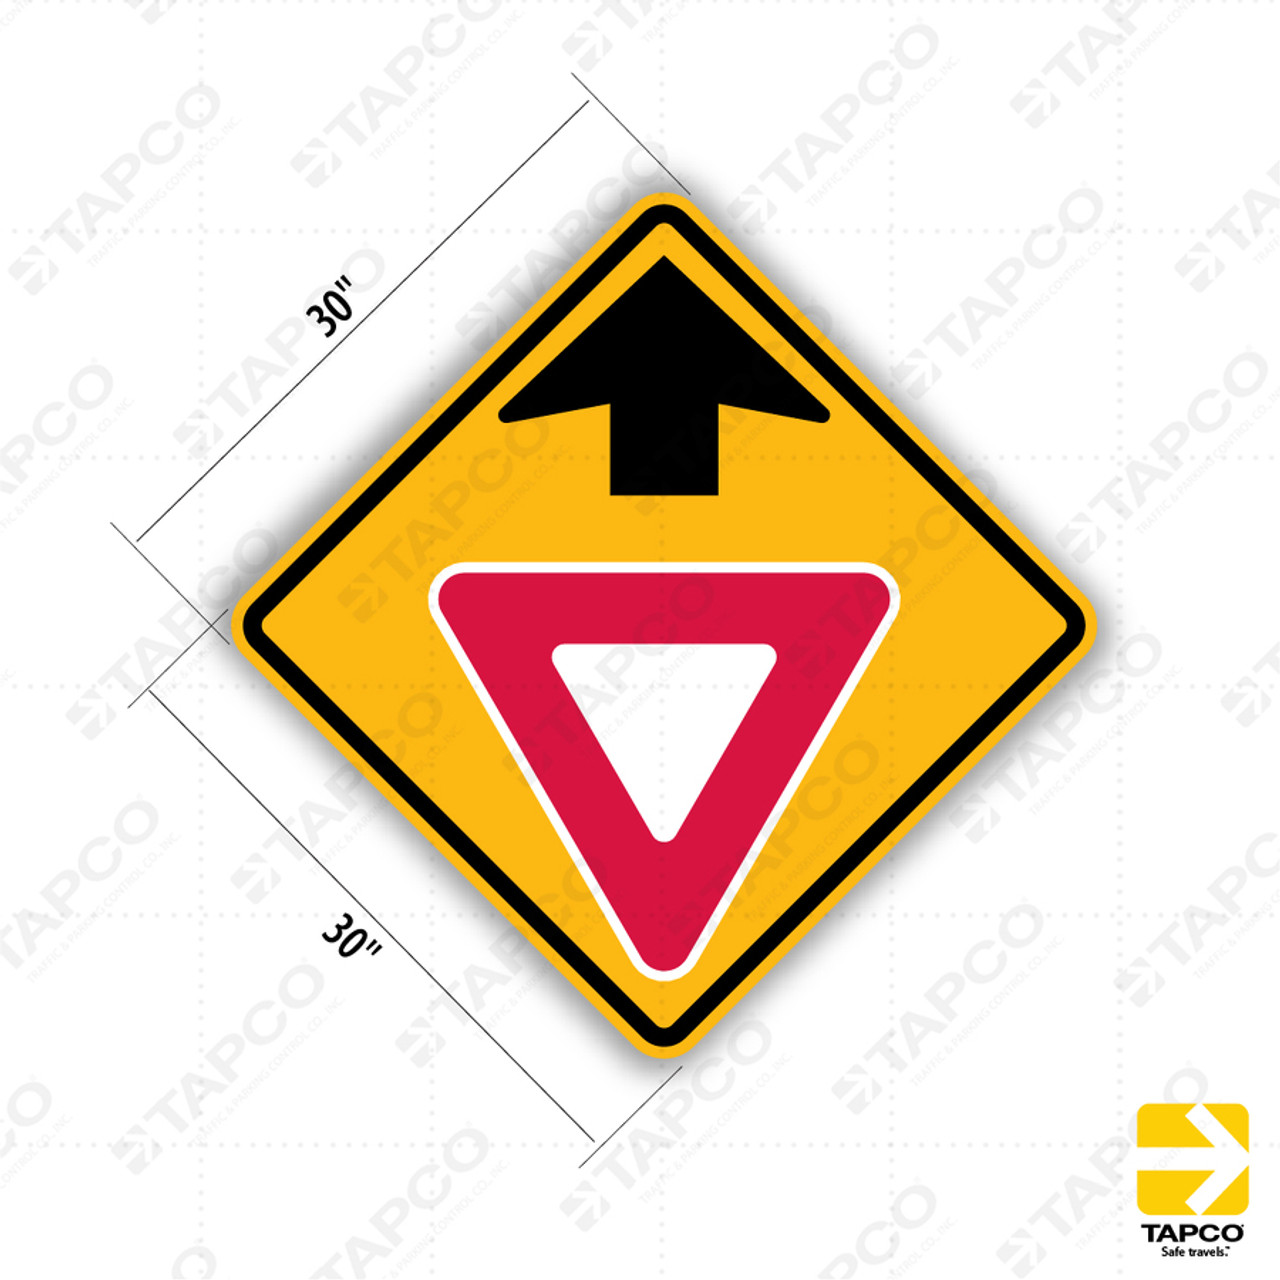 Yield Ahead Symbol Sign W3 2 Standard Traffic Signs Tapco